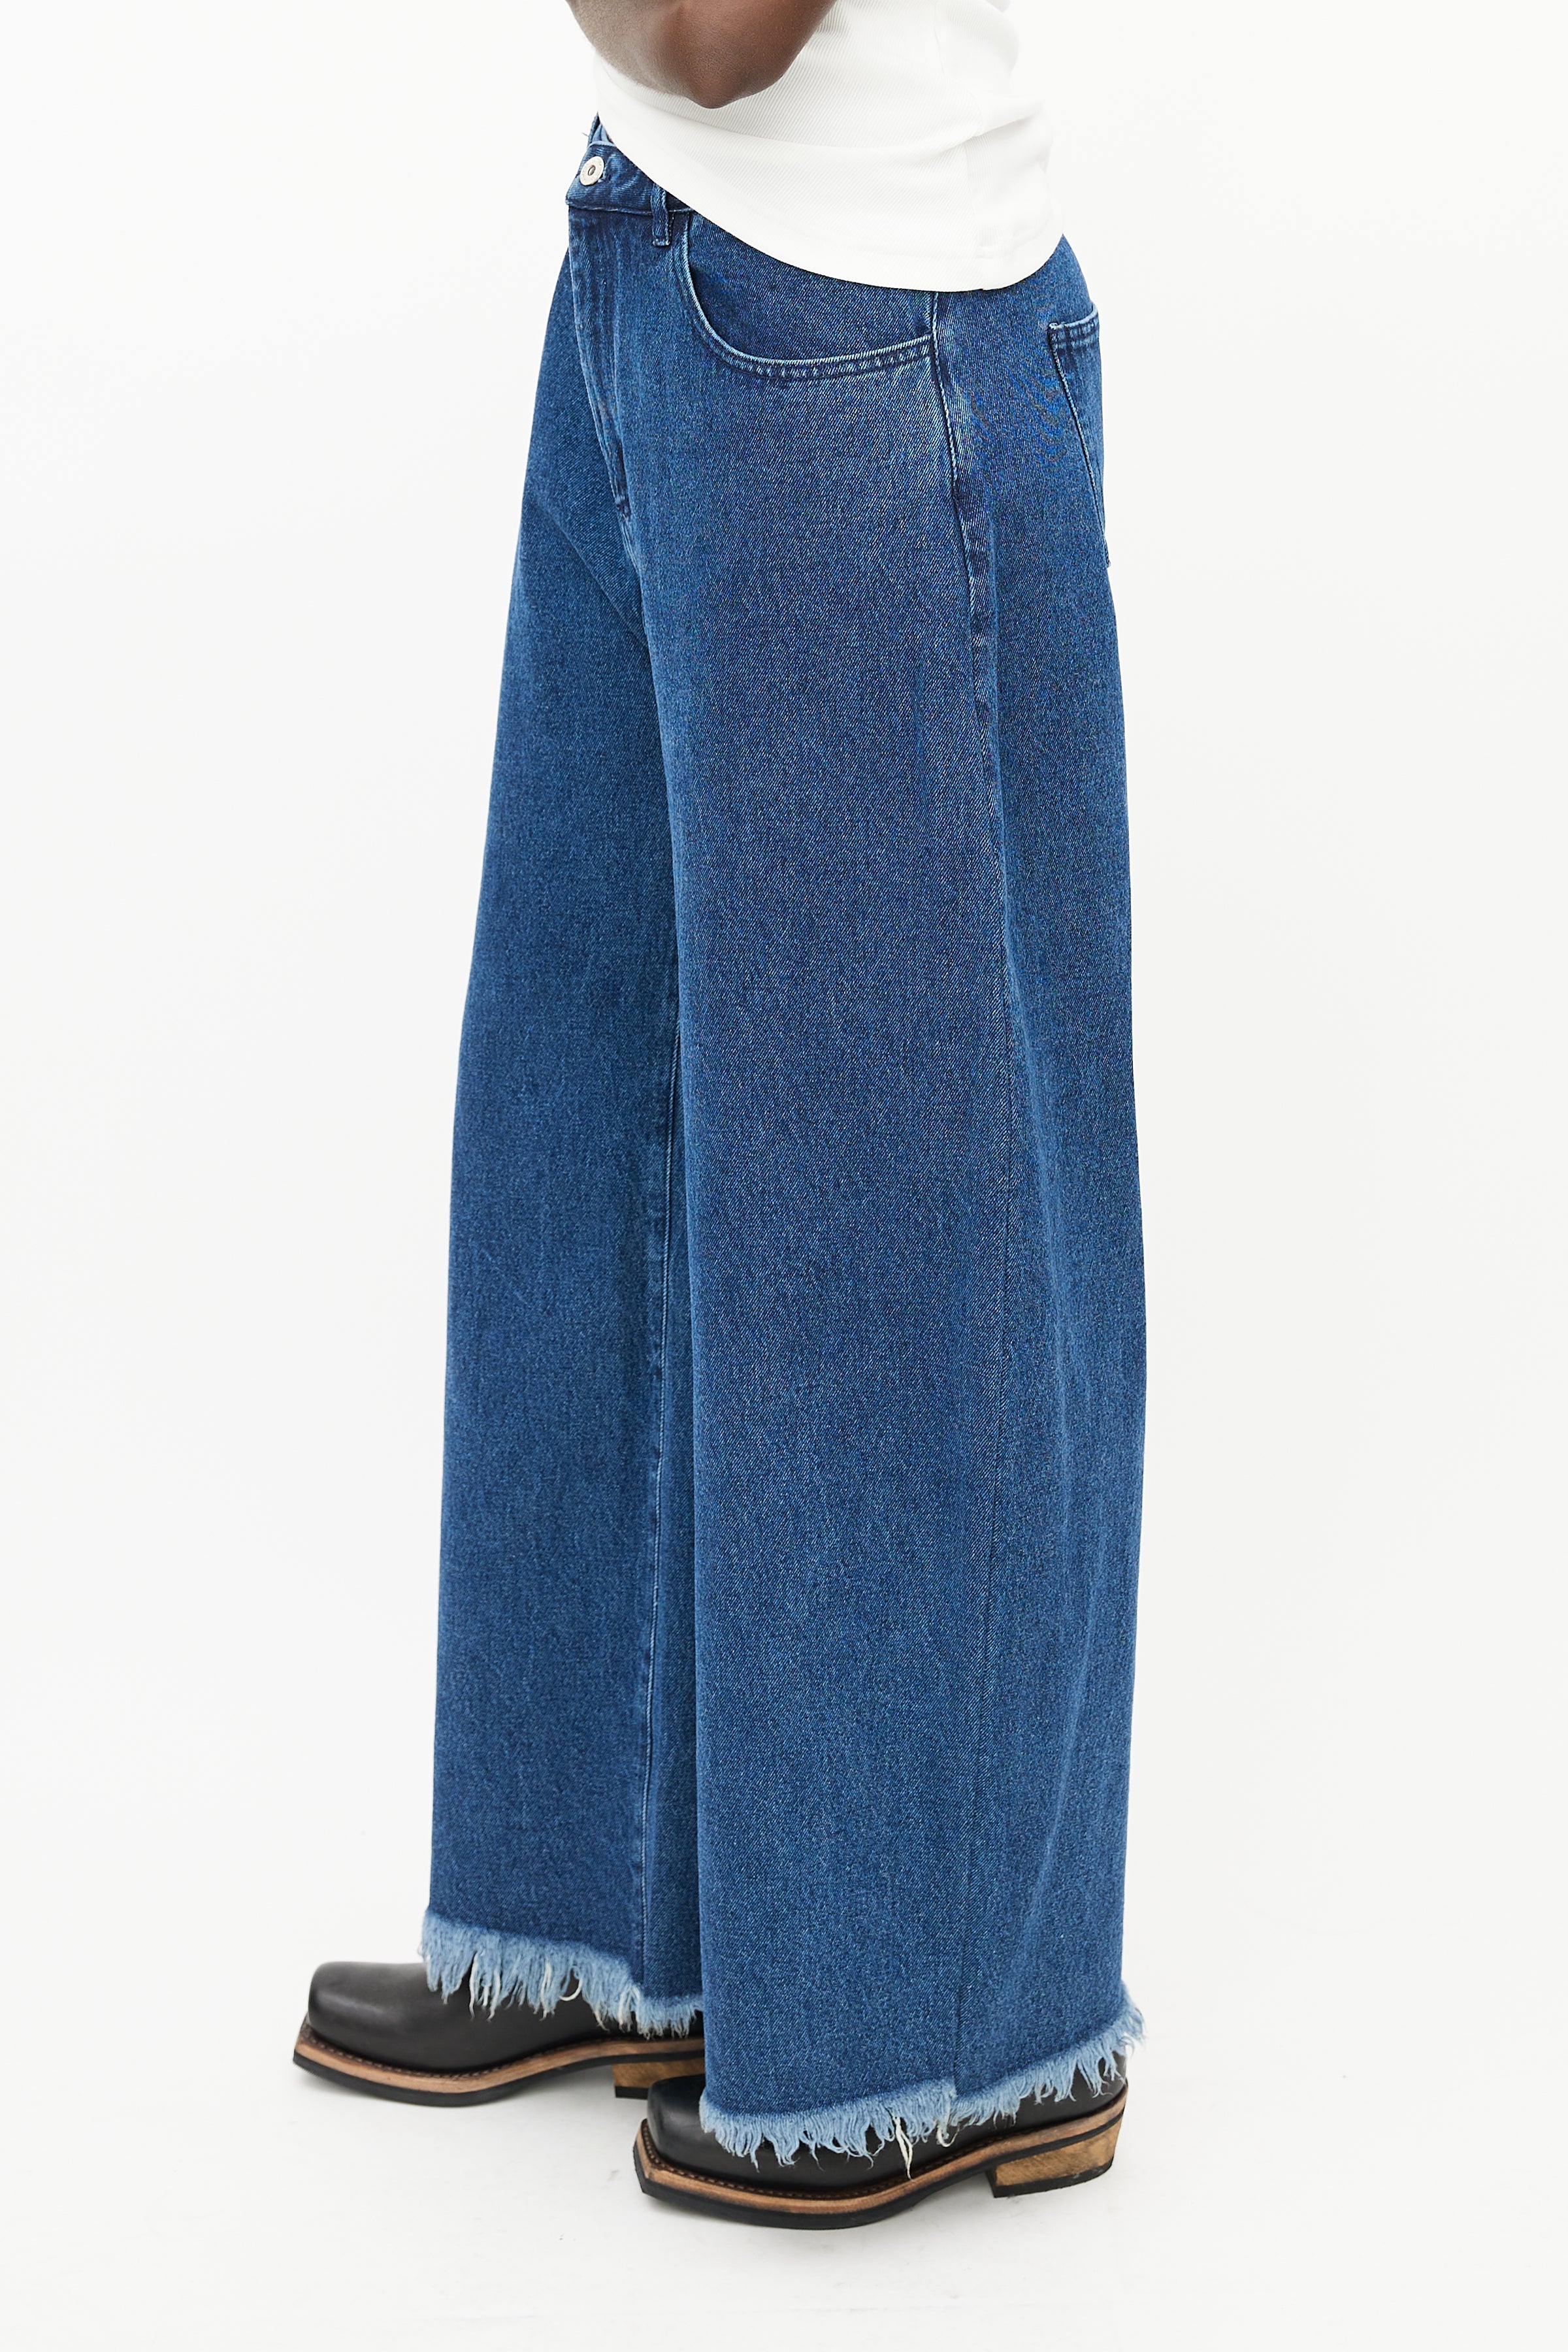 Marques Almeida Blue Multipocket Jeans